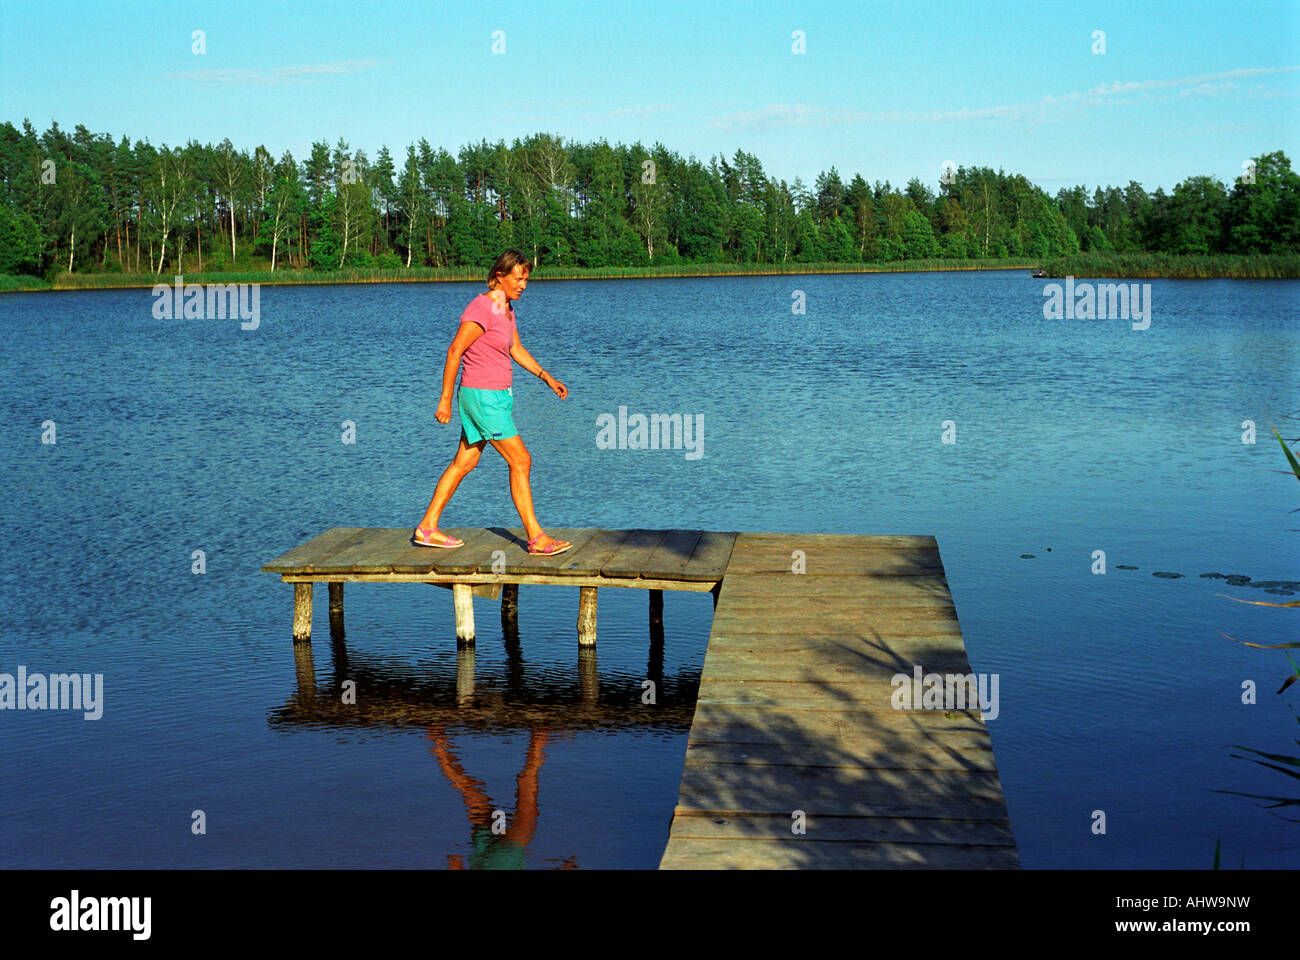 Woman walking on a jetty, Suwalki, Poland Stock Photo